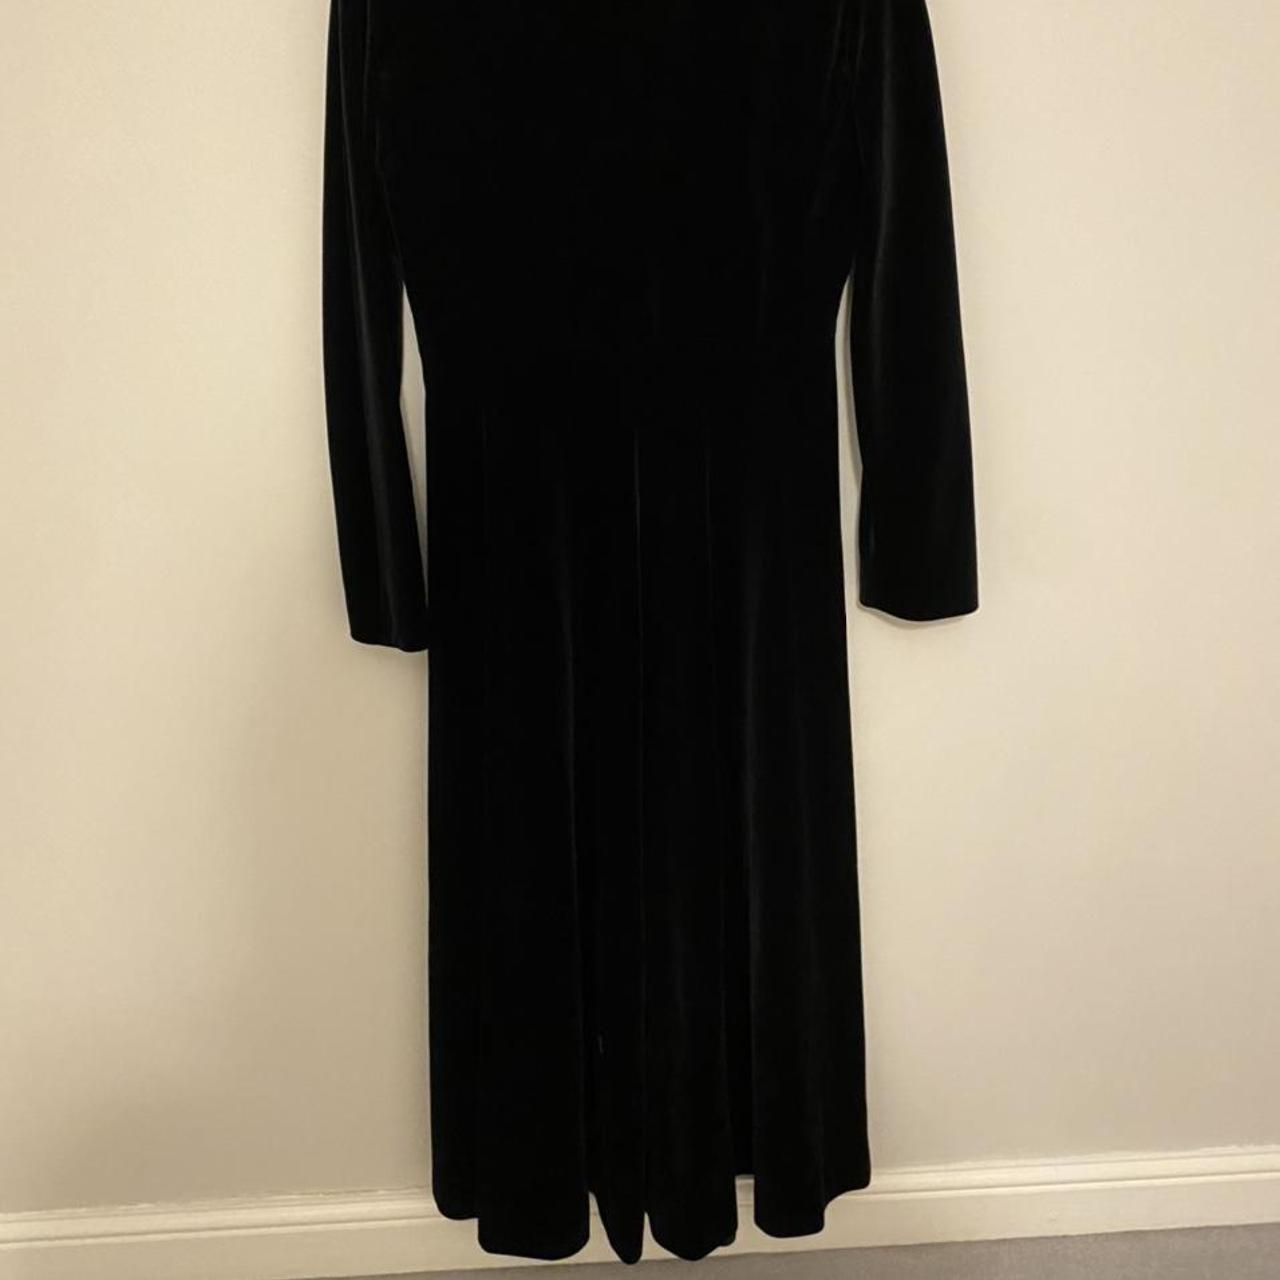 Long velvet black button up evening coat - the top... - Depop